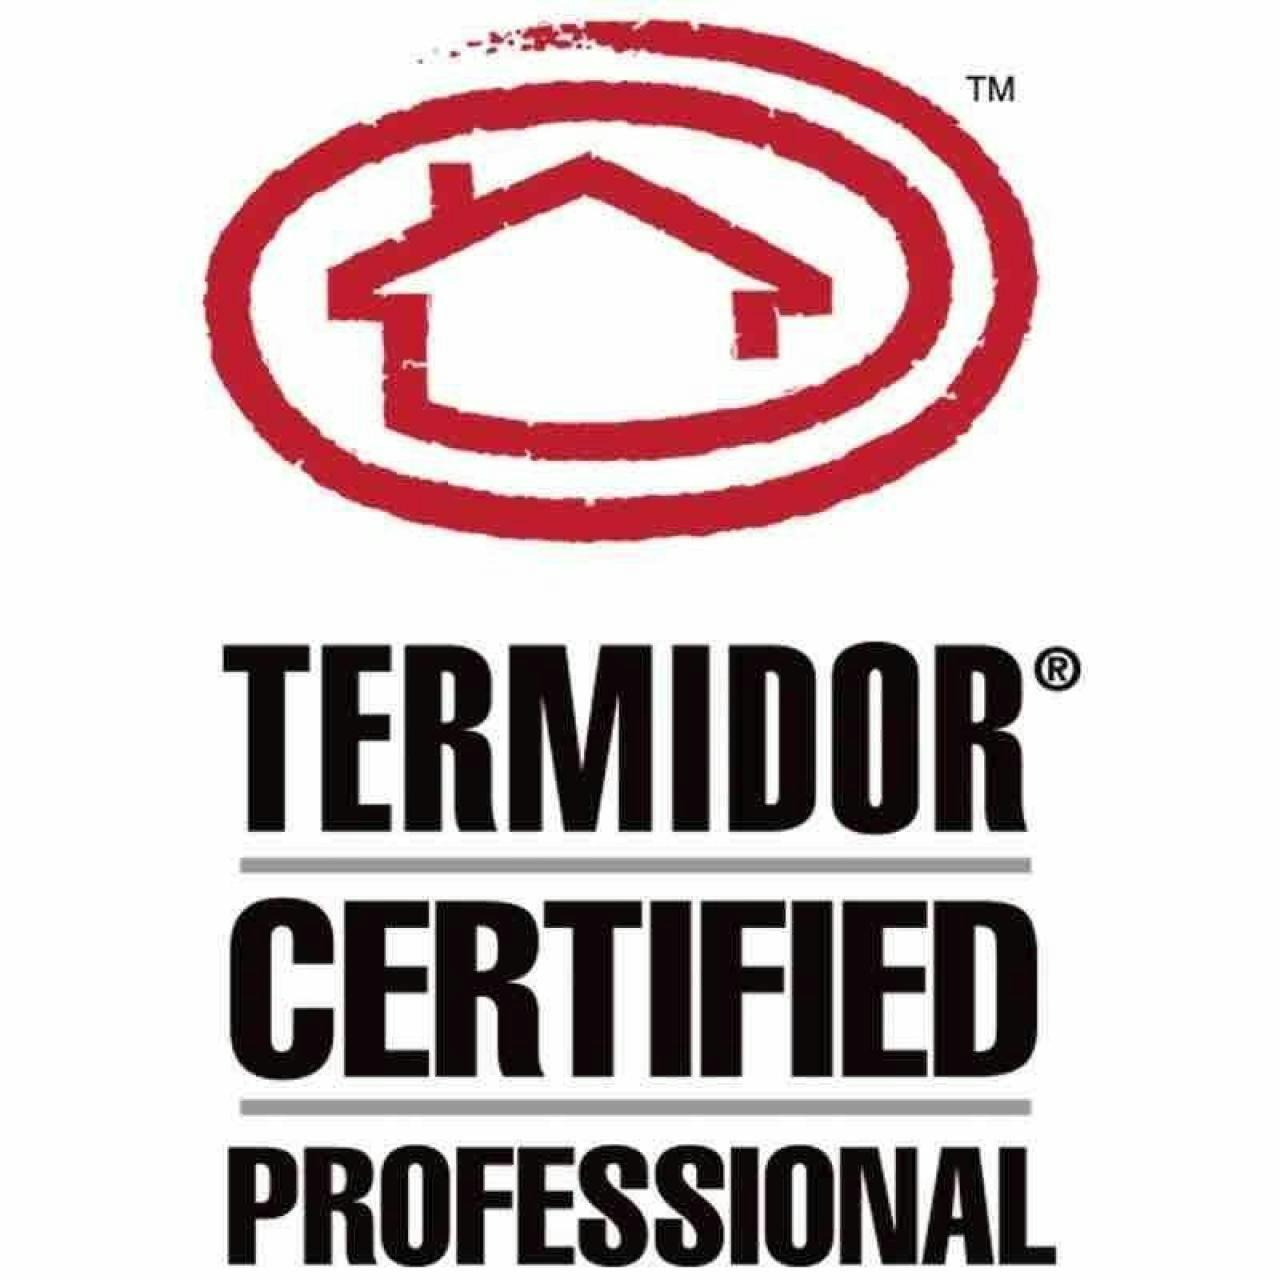 Termidor_Certified_Professional